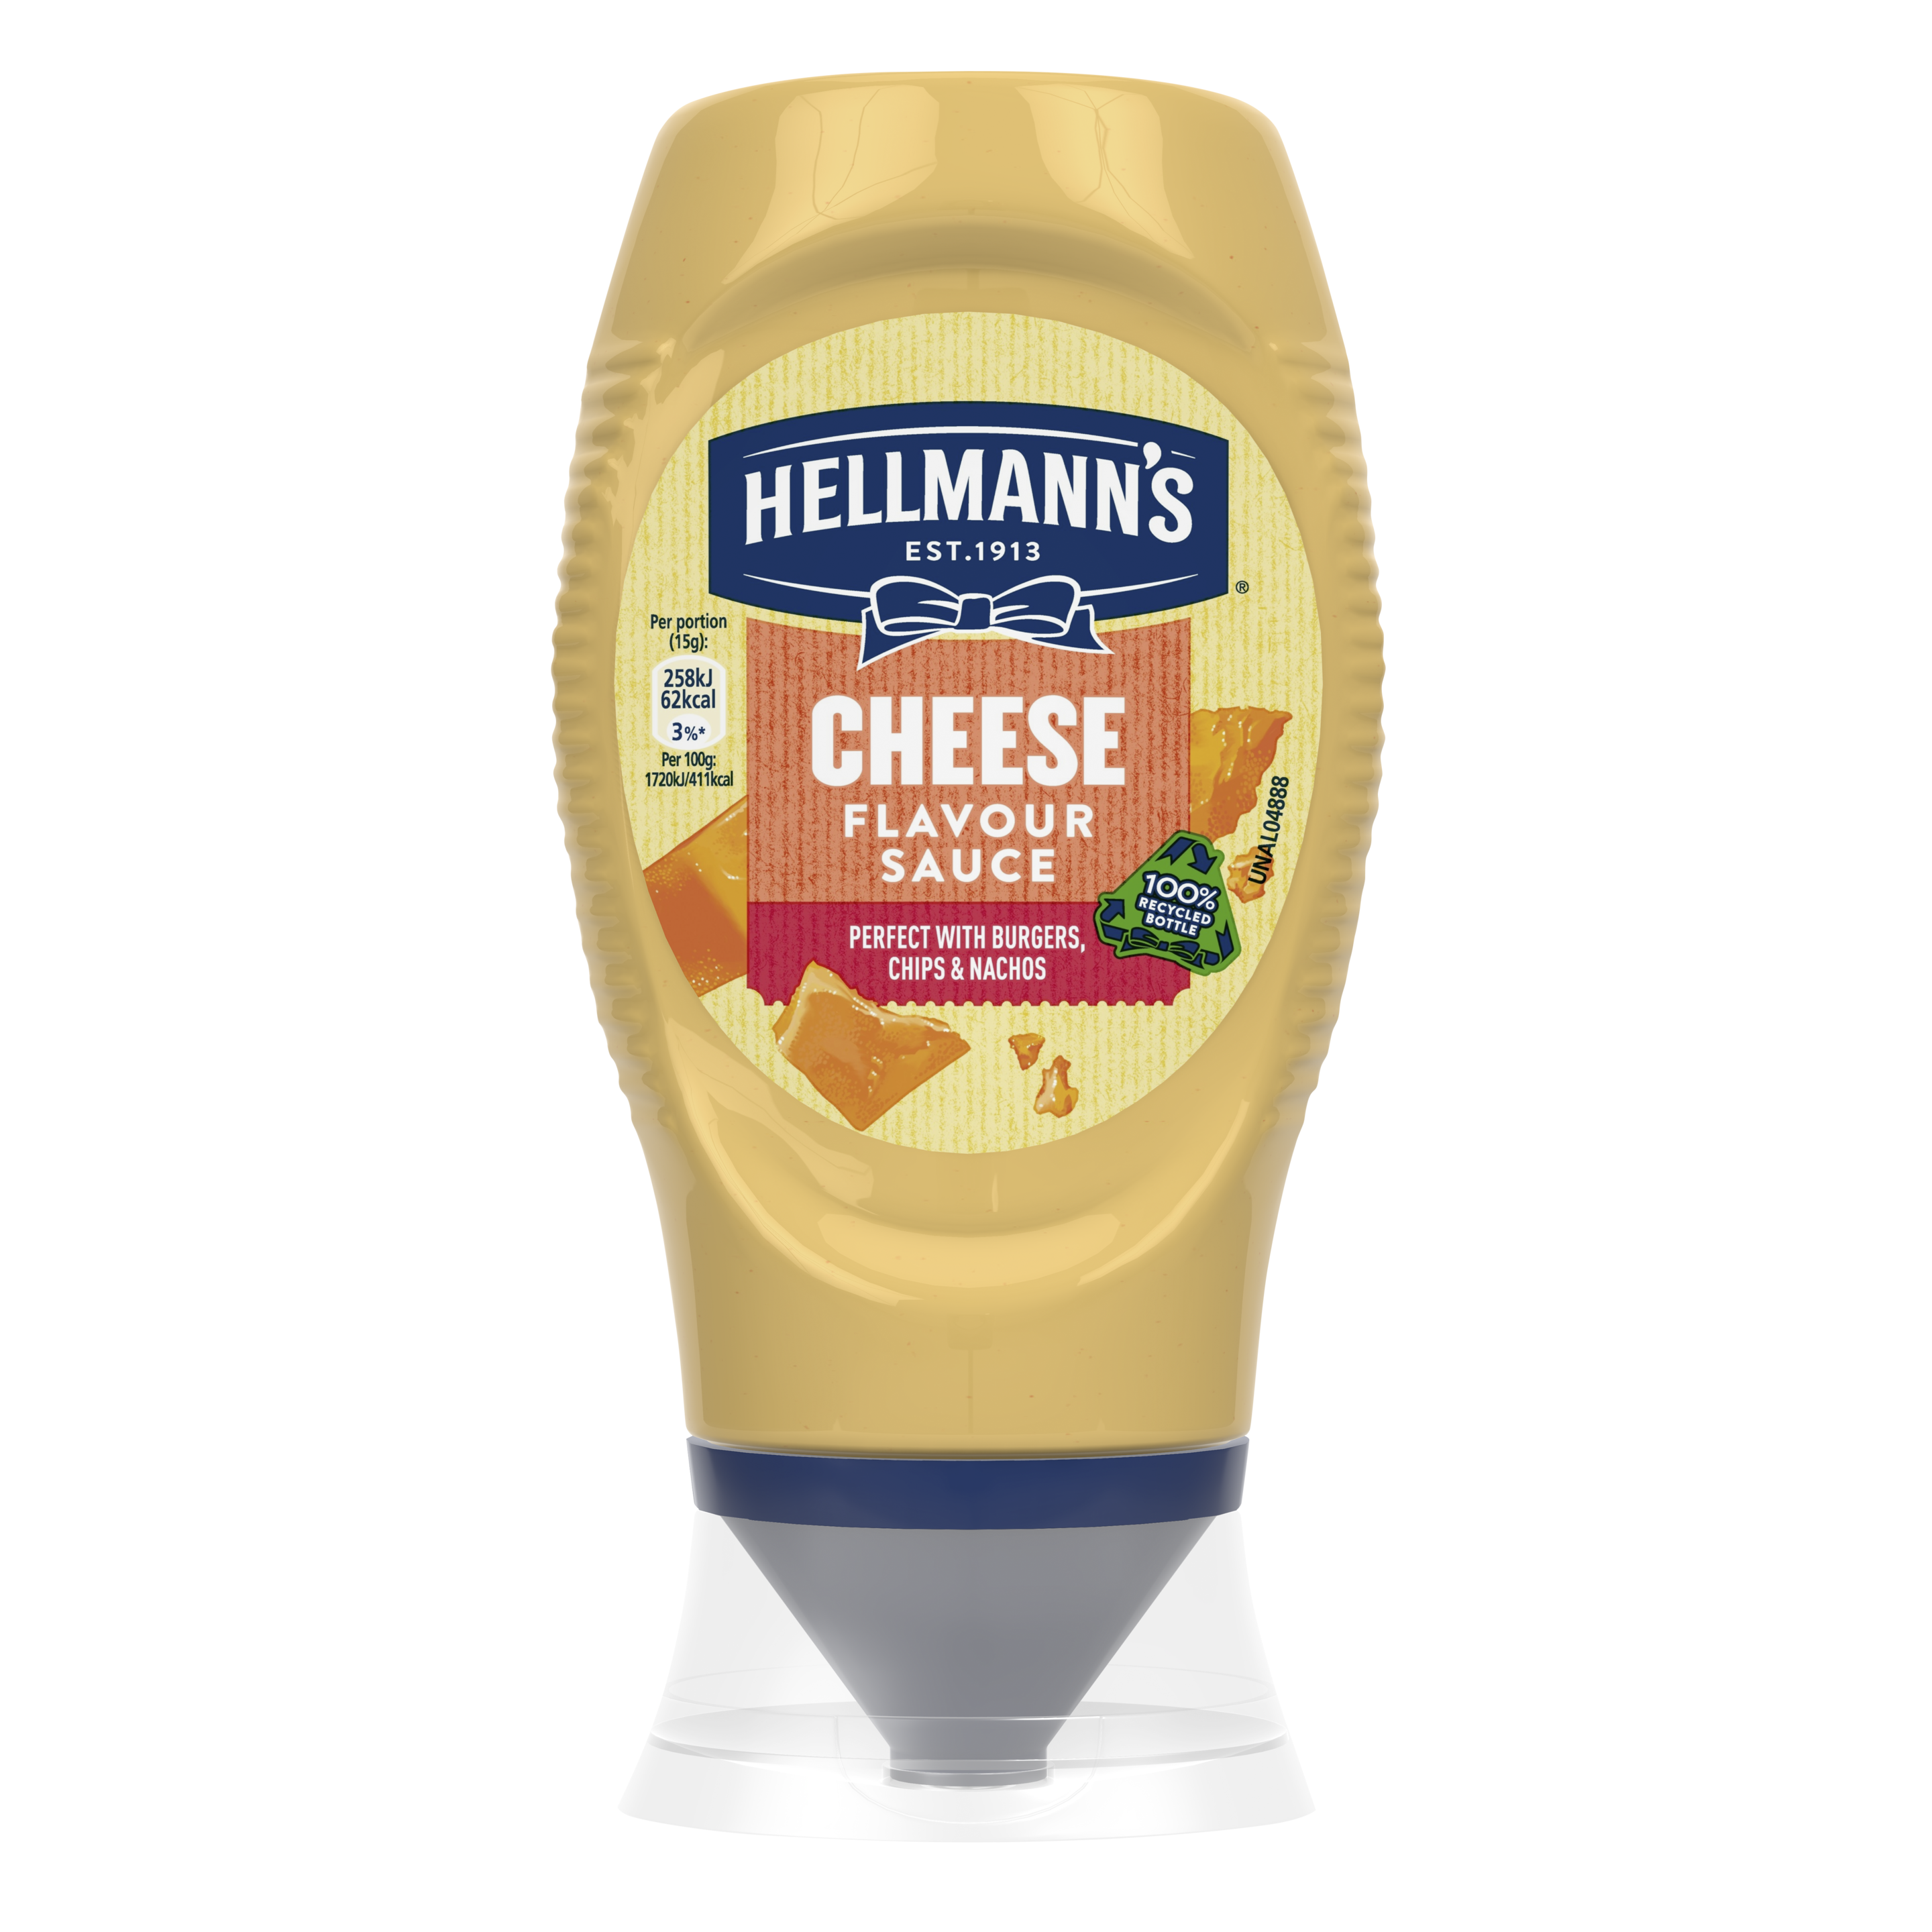 Hellmann's Cheese Flavour Sauce